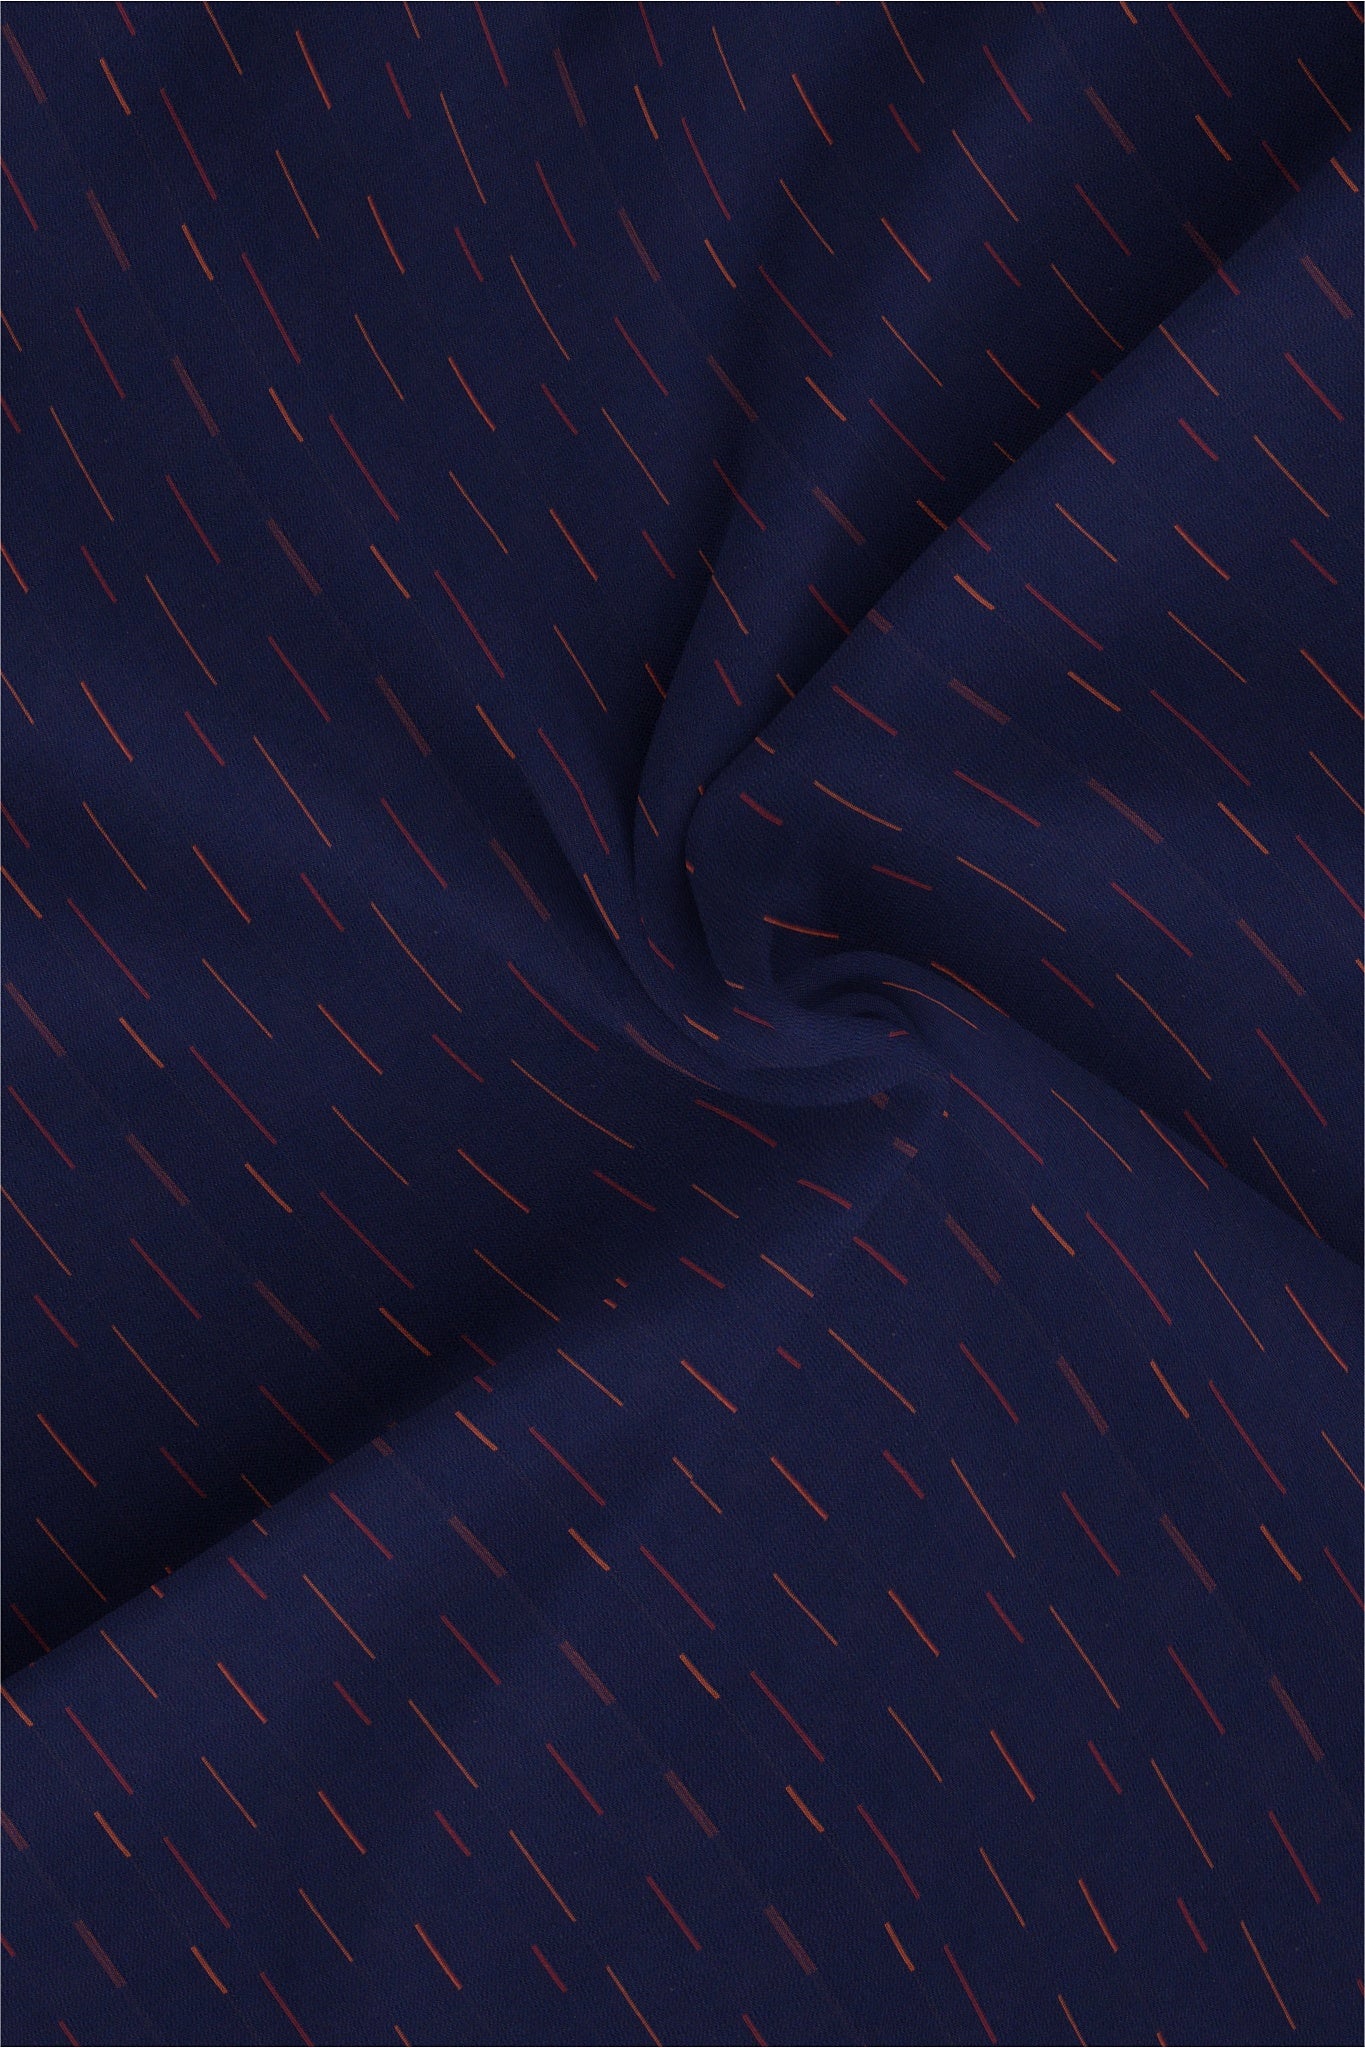 Sodalite Blue and Claret Red Jacquard Dash Stripes Premium Cotton Shirt